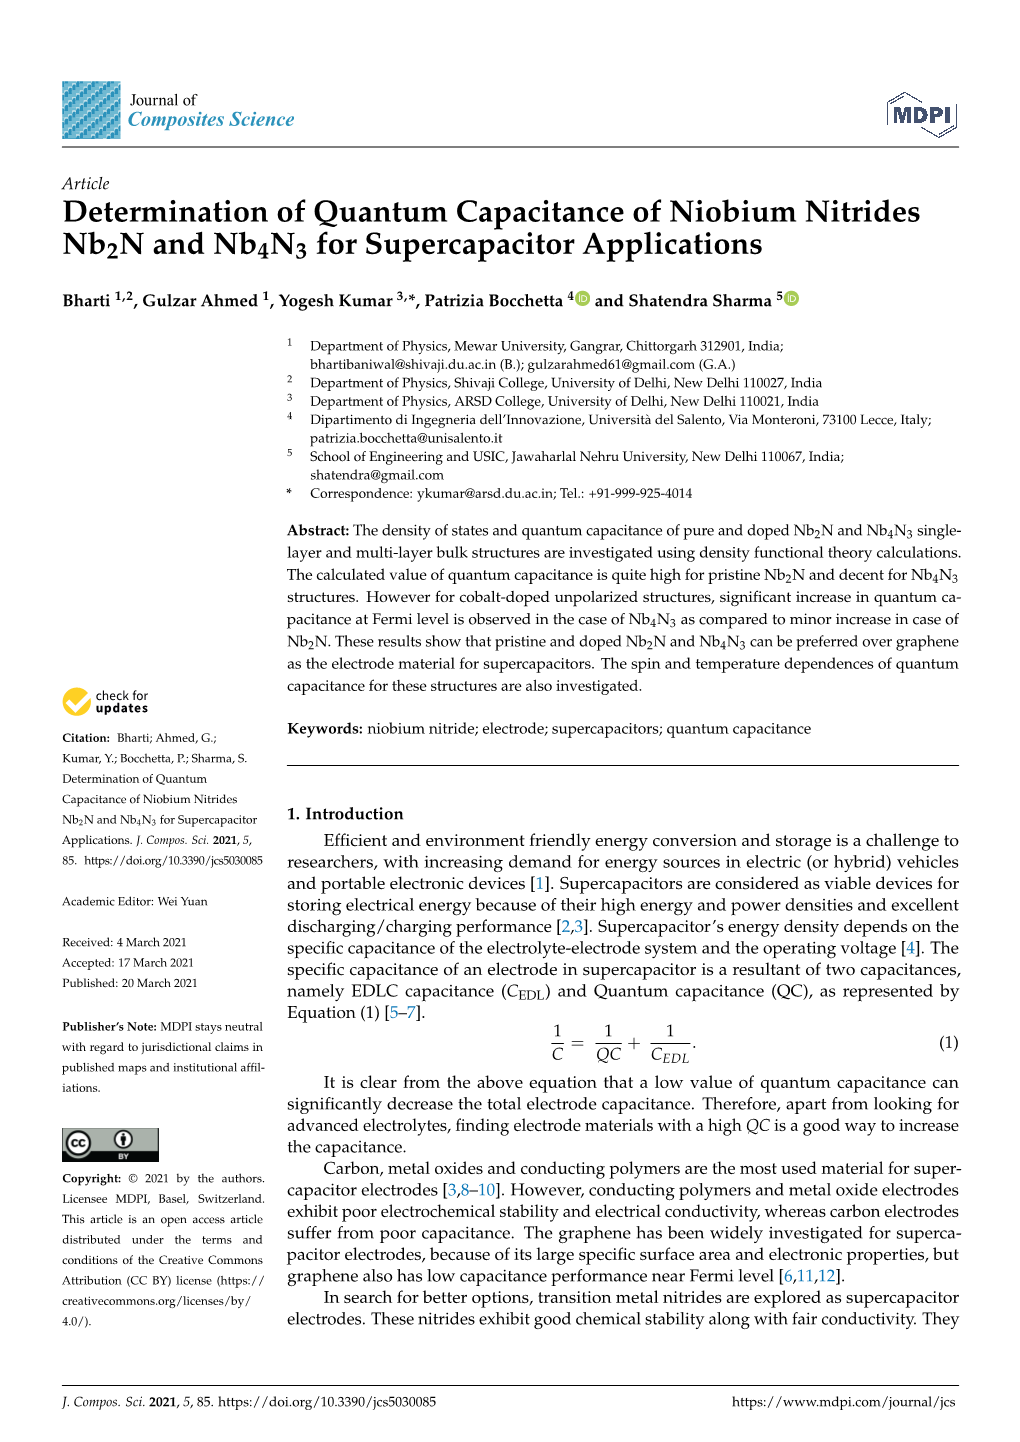 Determination of Quantum Capacitance of Niobium Nitrides Nb2n and Nb4n3 for Supercapacitor Applications